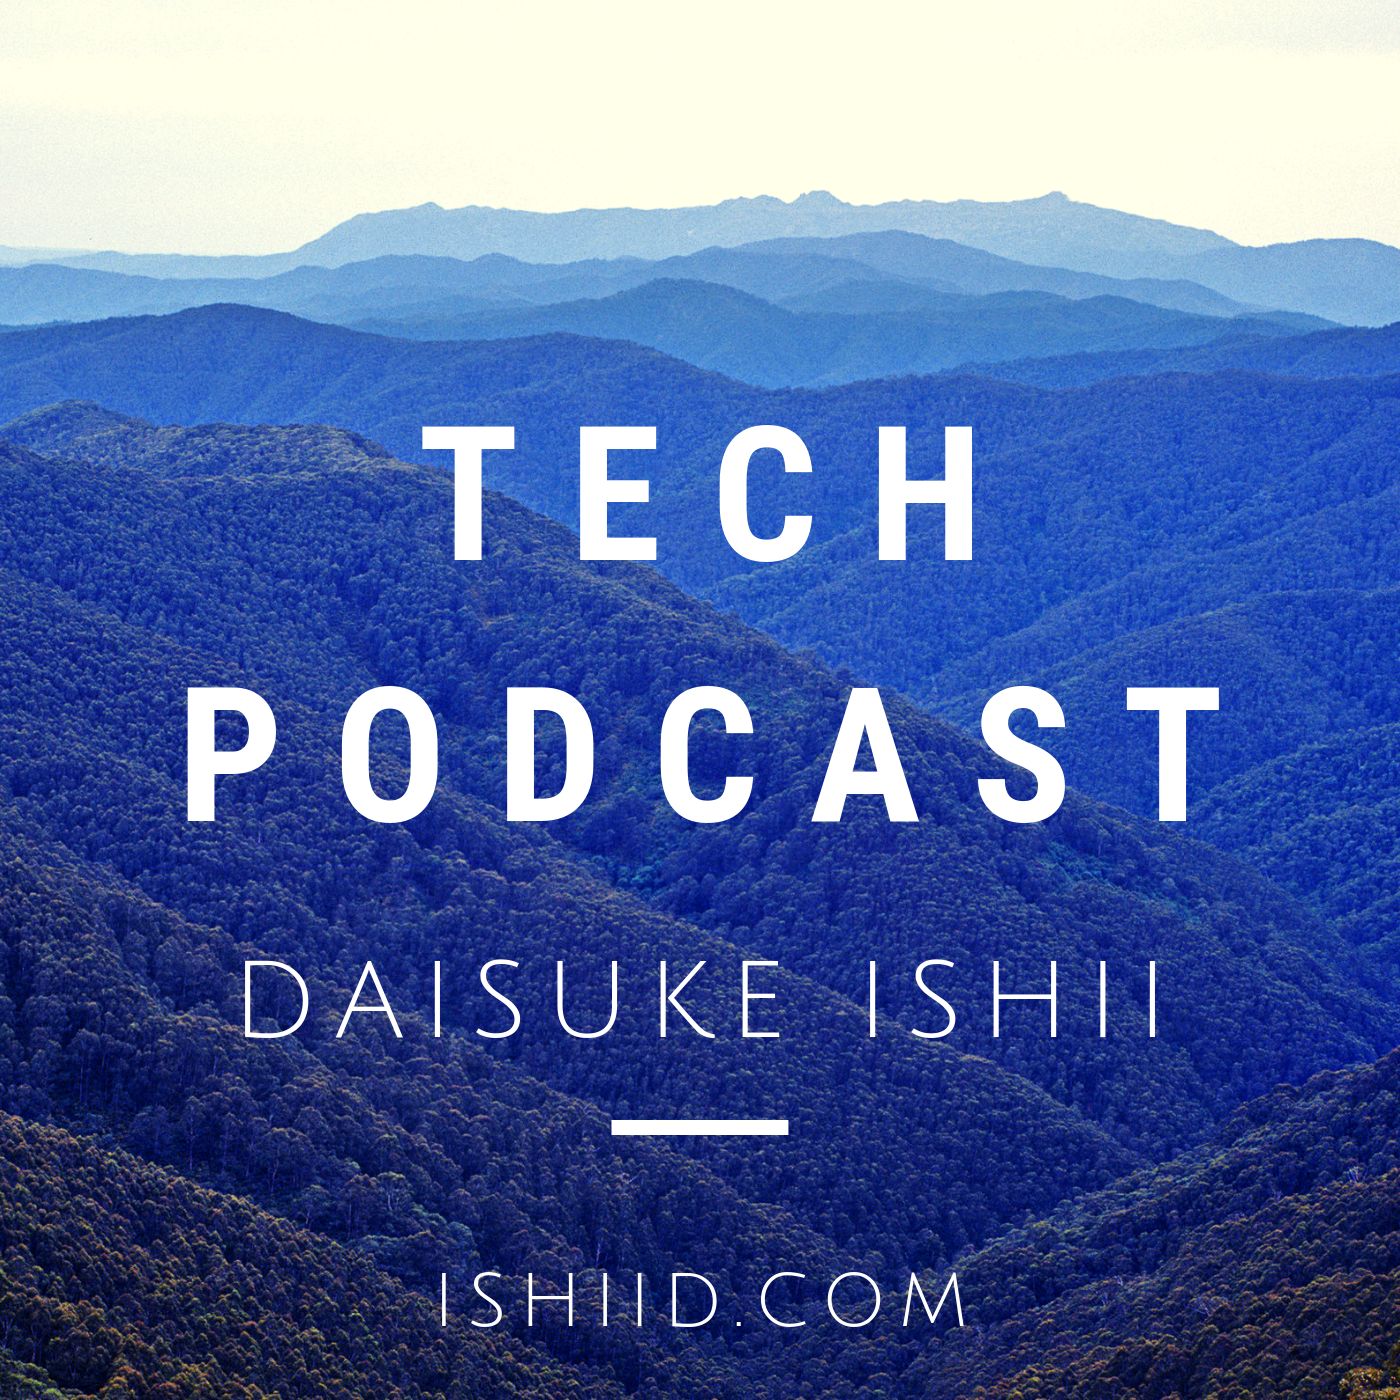 Tech Podcast by Daisuke Ishii